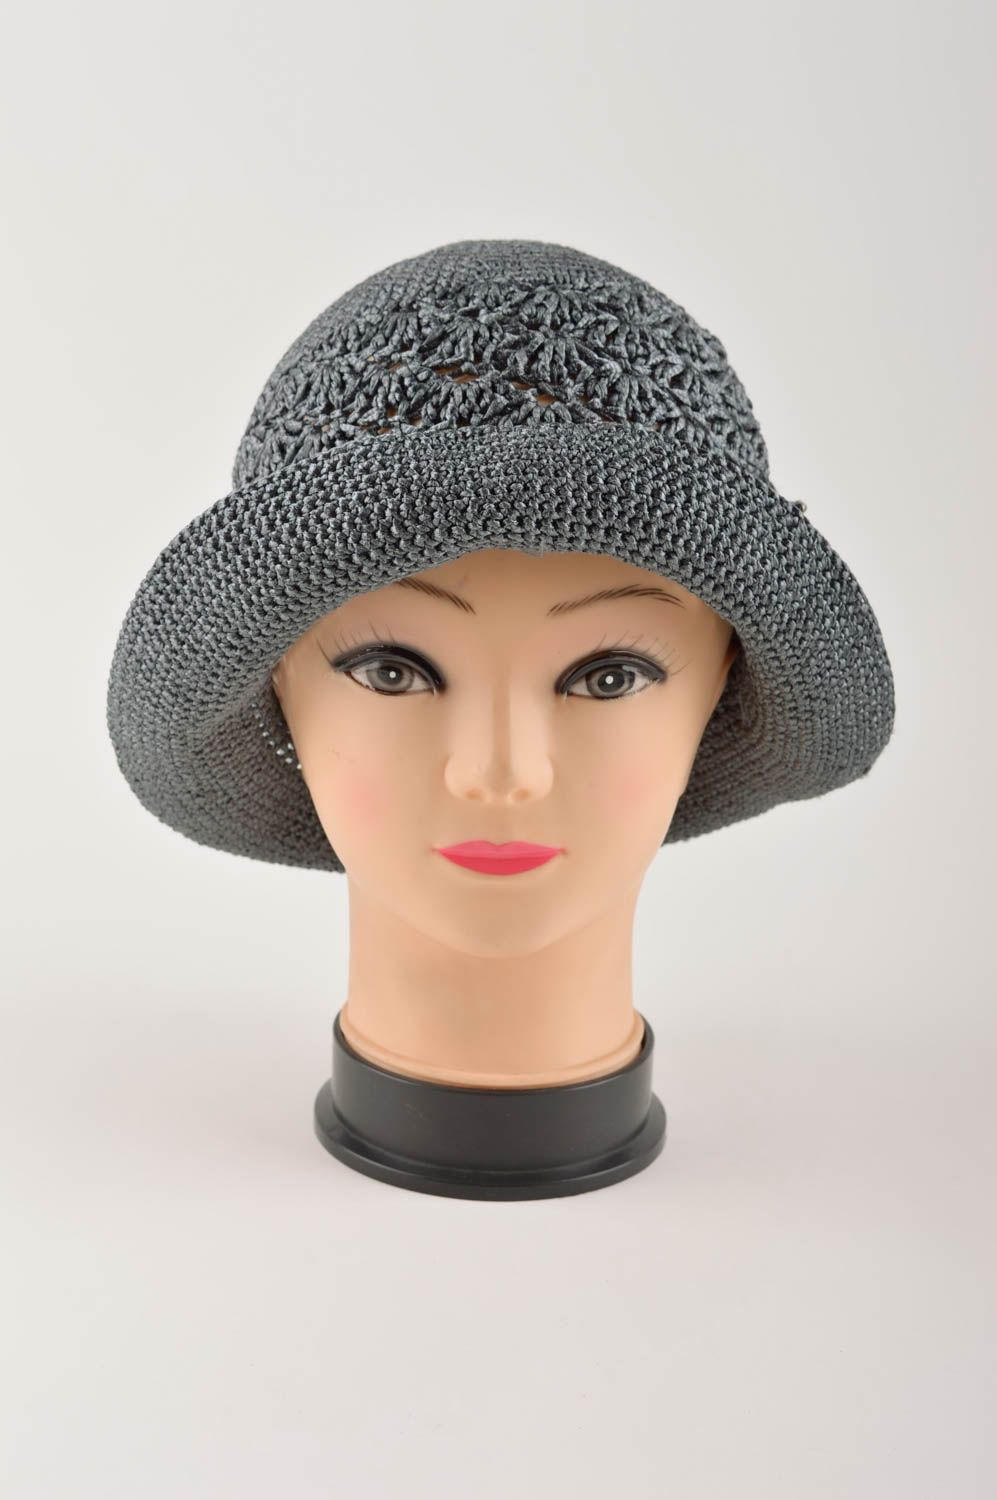 Handmade hat unusual hat for girls gift ideas women panama beach hats photo 3